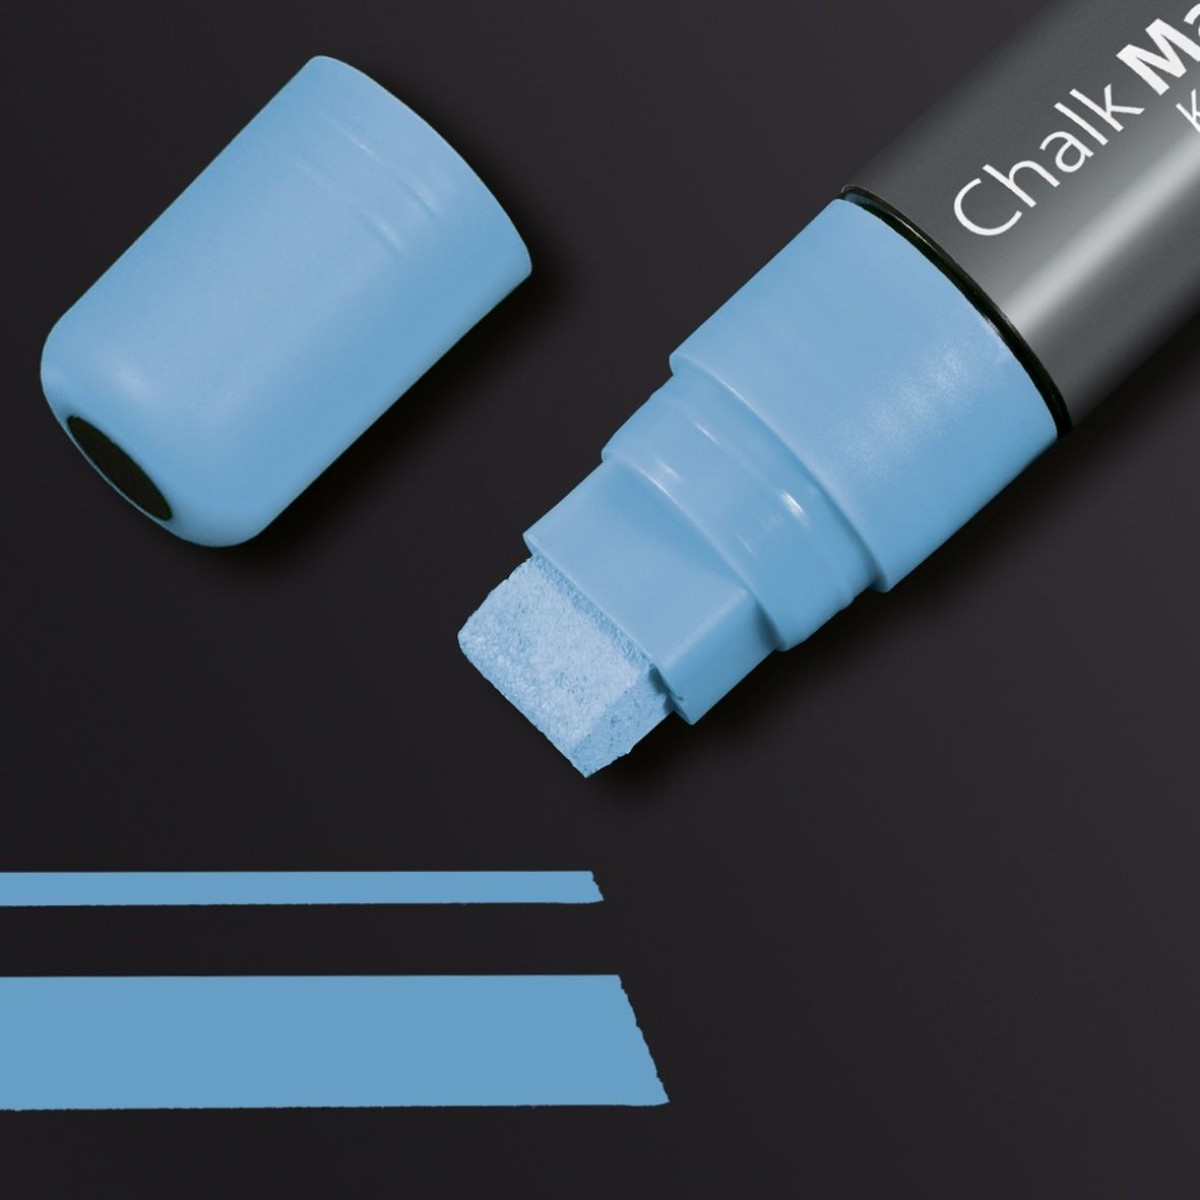 GL175 - Sigel - Marcatore a gesso 150, punta obliqua 5-15 mm - Azzurro